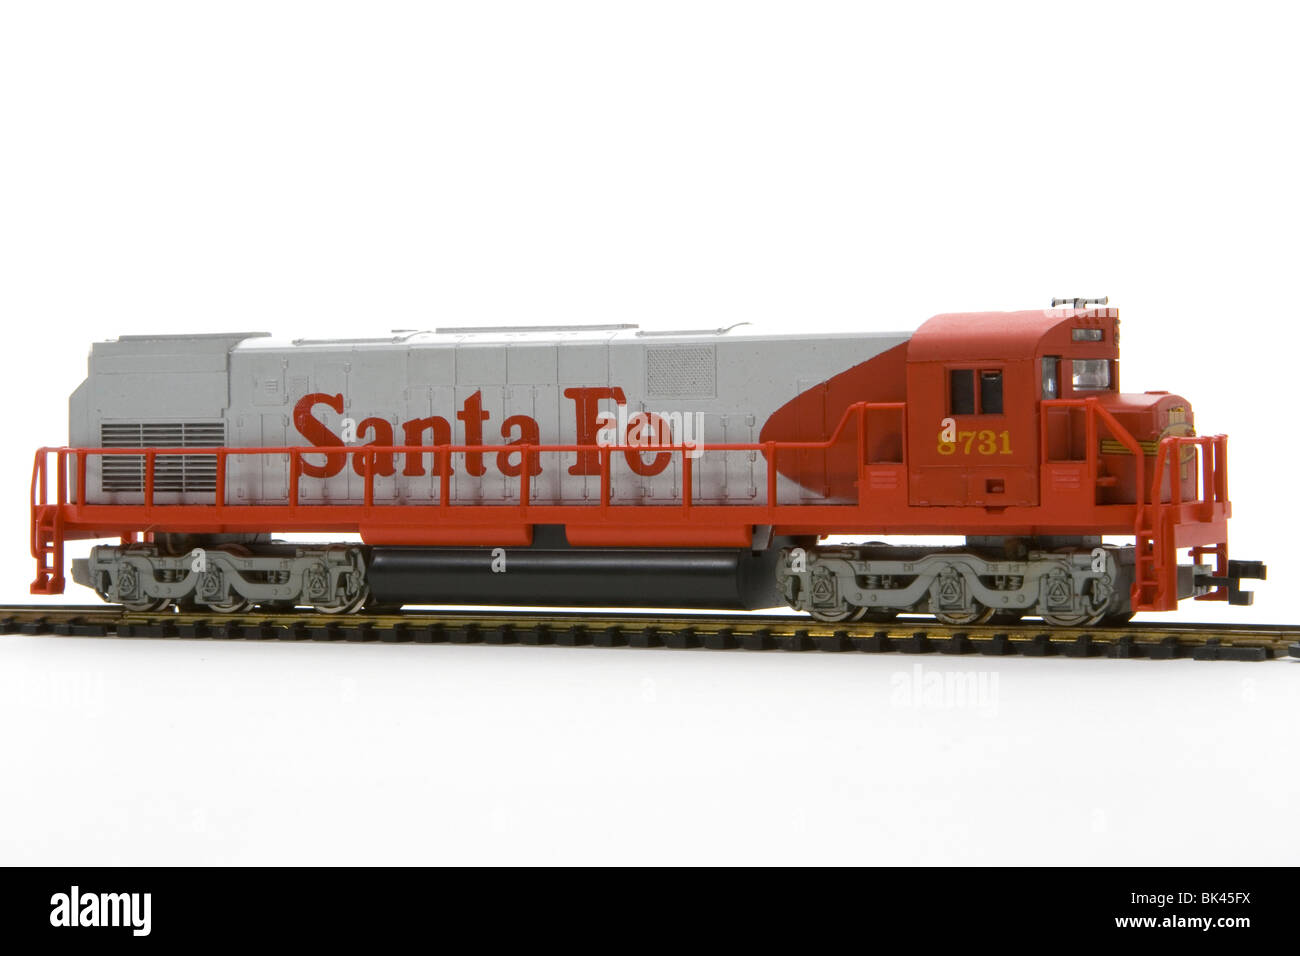 HO scale model train locomotive Stock Photo